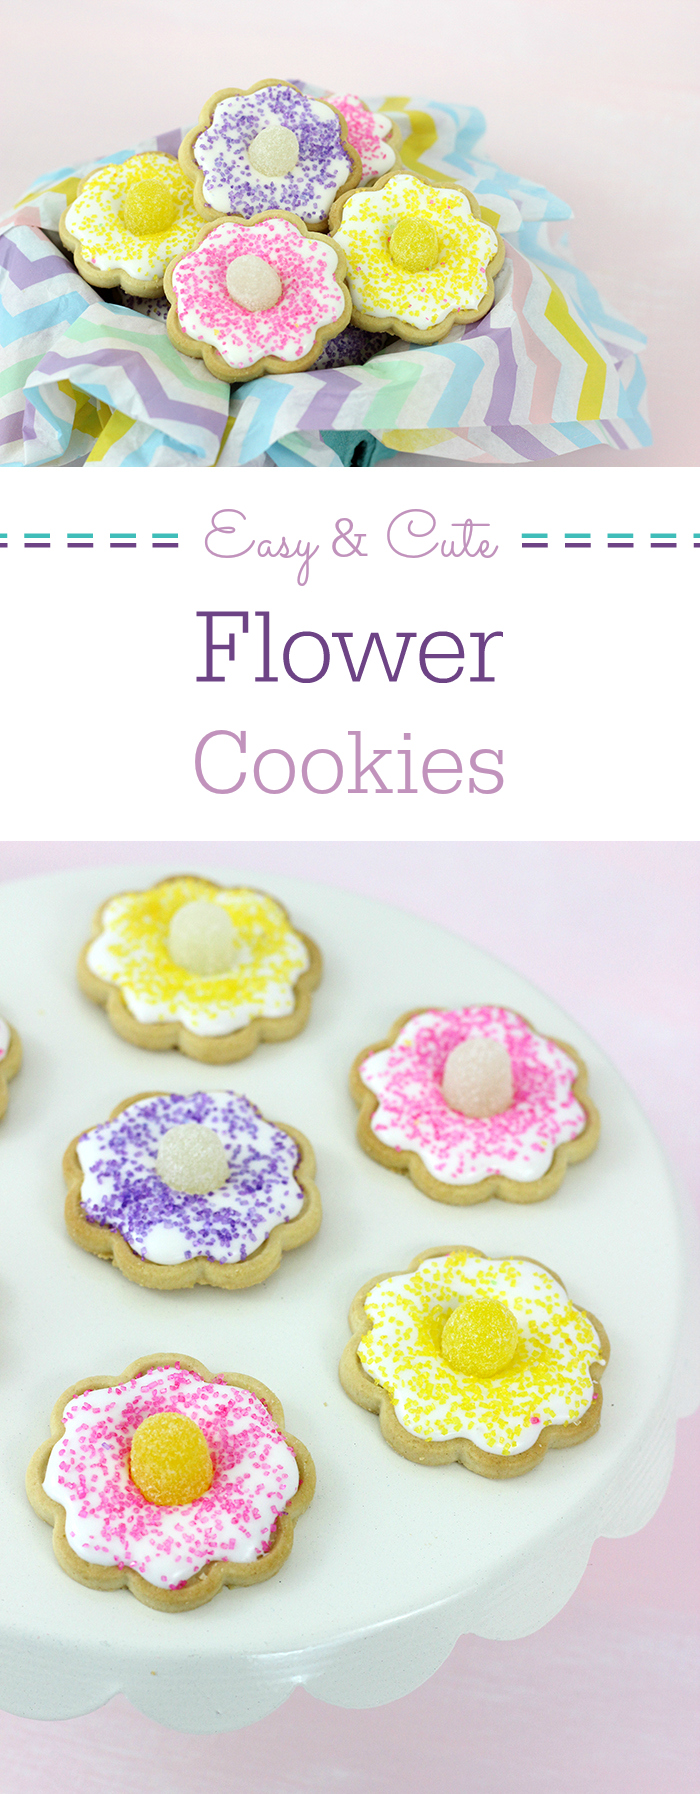 Easy & Cute Flower Cookies with only 4 Ingredients using $1 store cookies!